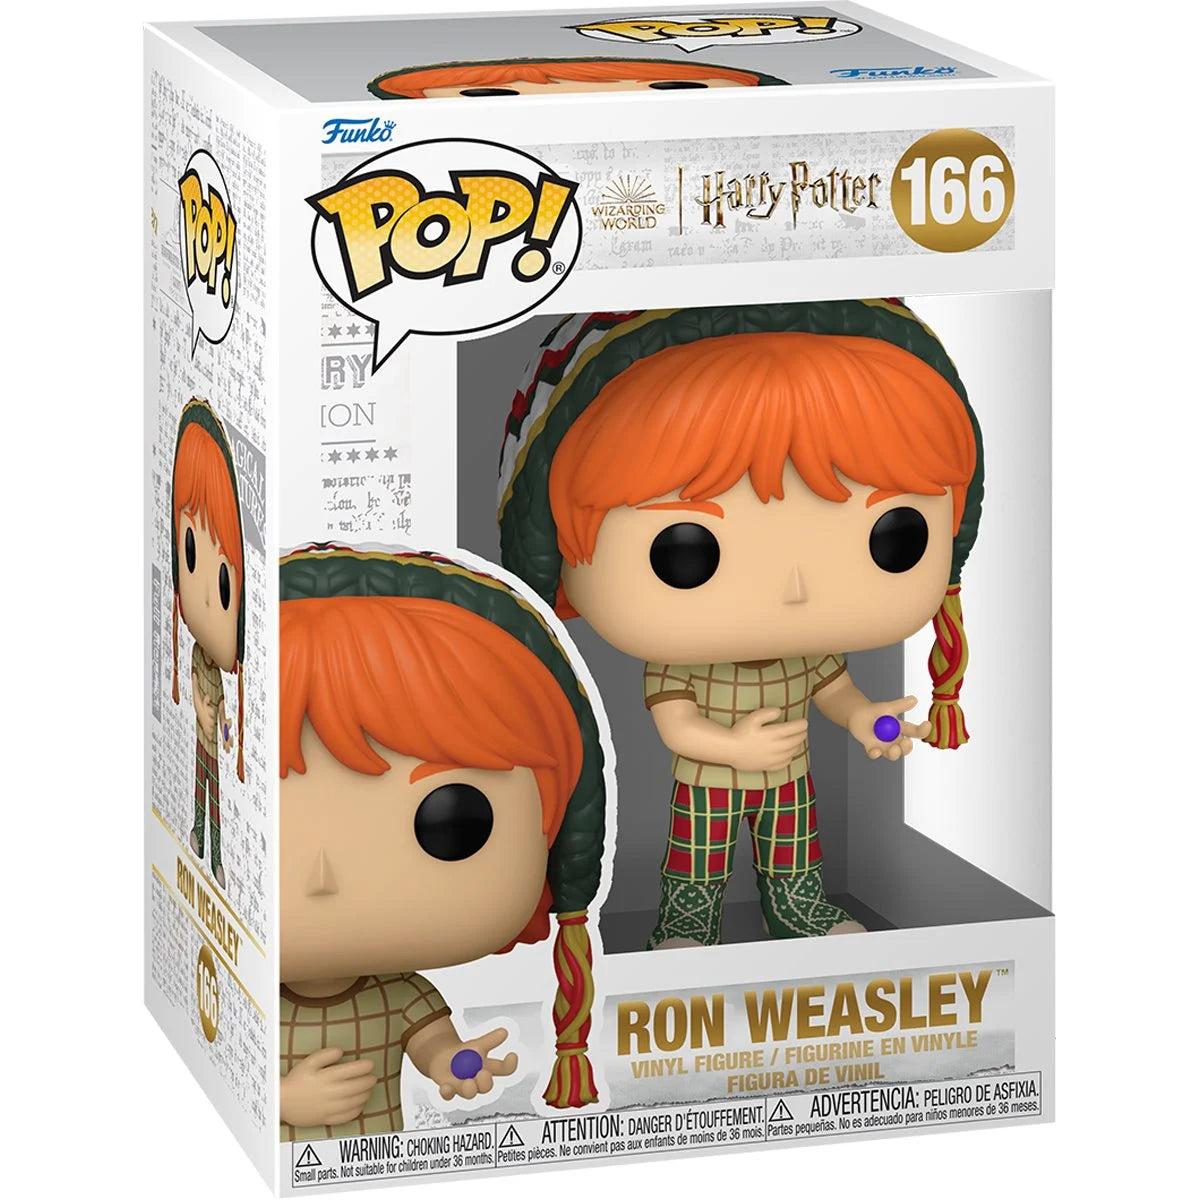 Harry Potter Ron Weasley pop